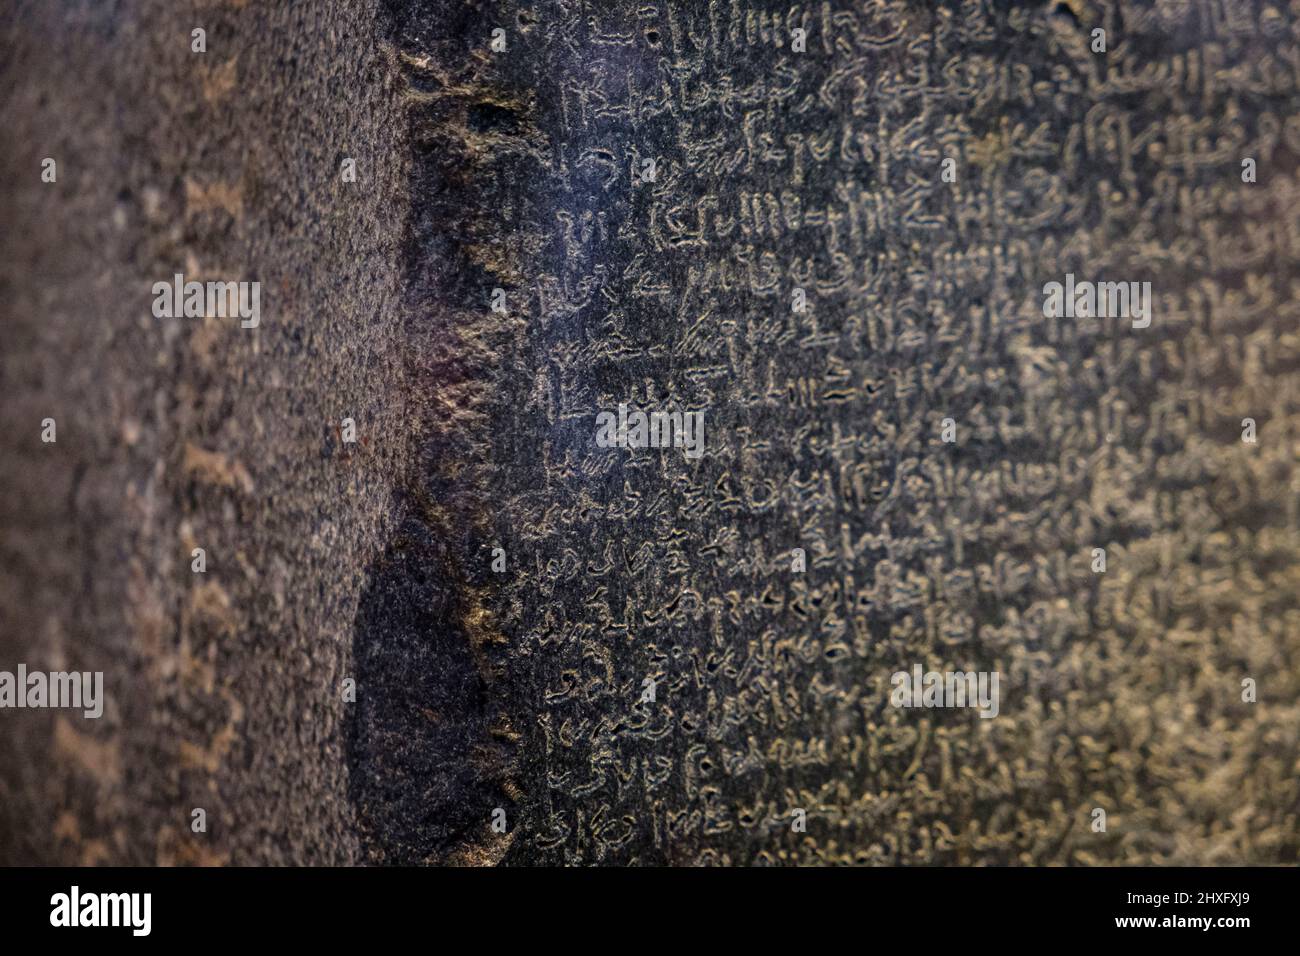 Pietra Rosetta, stele egiziana trilingue, museo britannico, Londra, Inghilterra, Gran Bretagna. Foto Stock